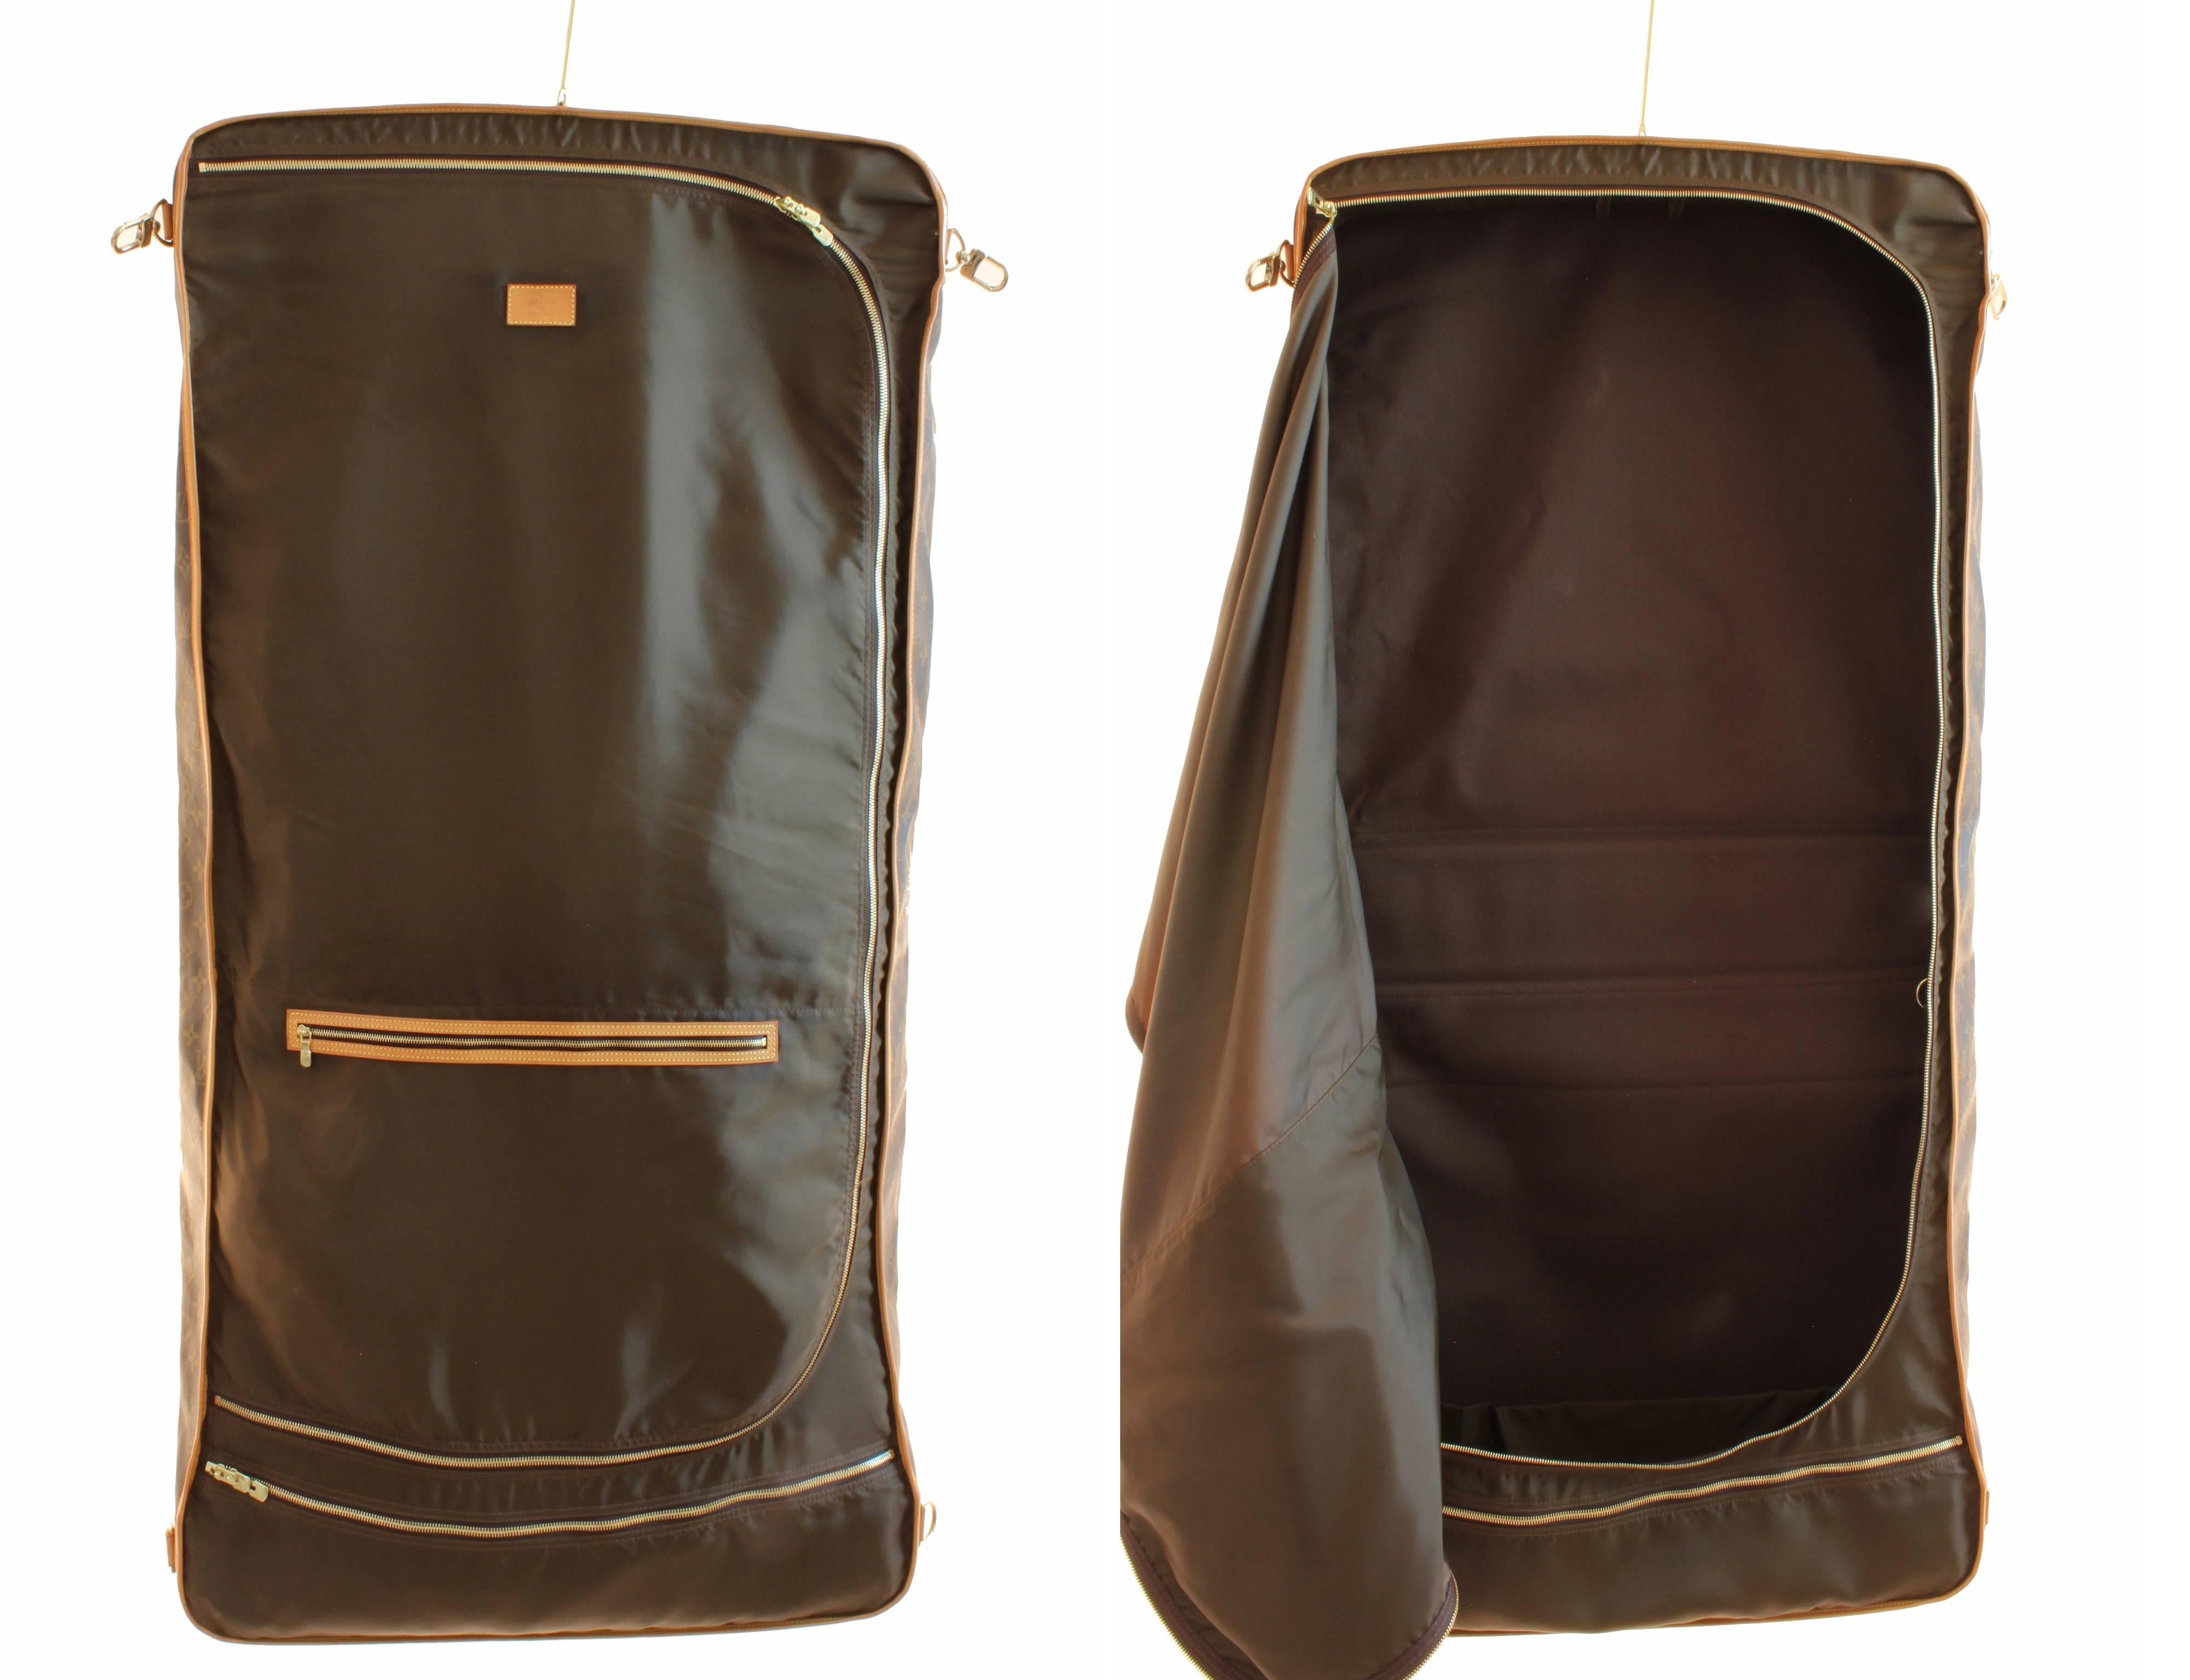 Black Louis Vuitton Monogram Garment Bag Suitcase Travel Luggage + Shoulder Strap 1999